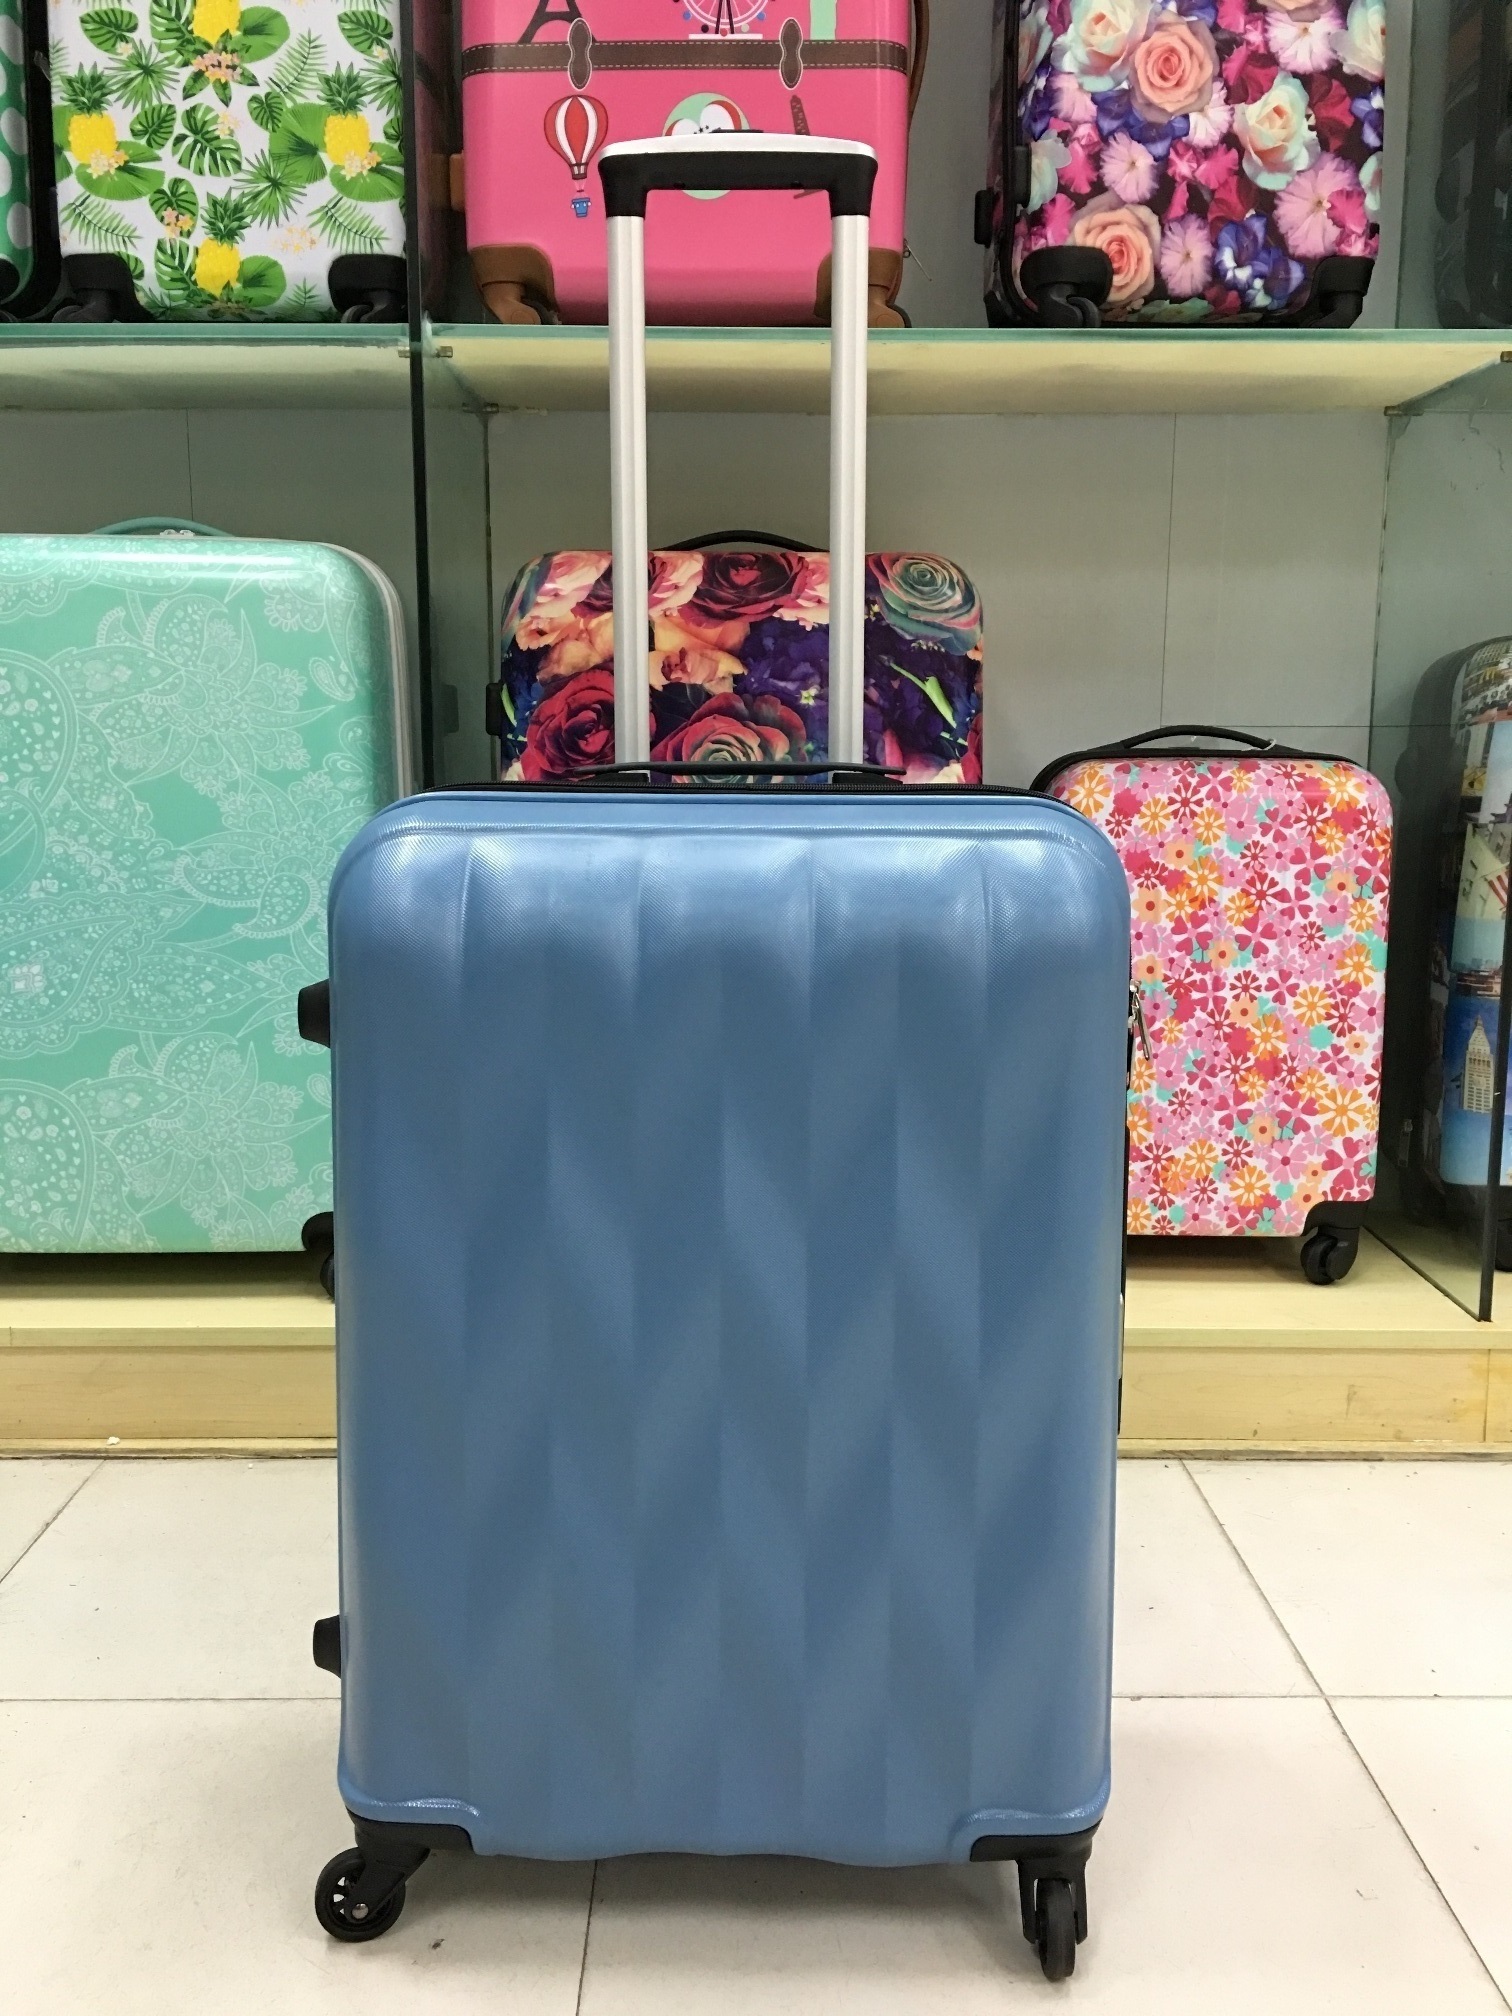 yanteng travel bag with fashion looks